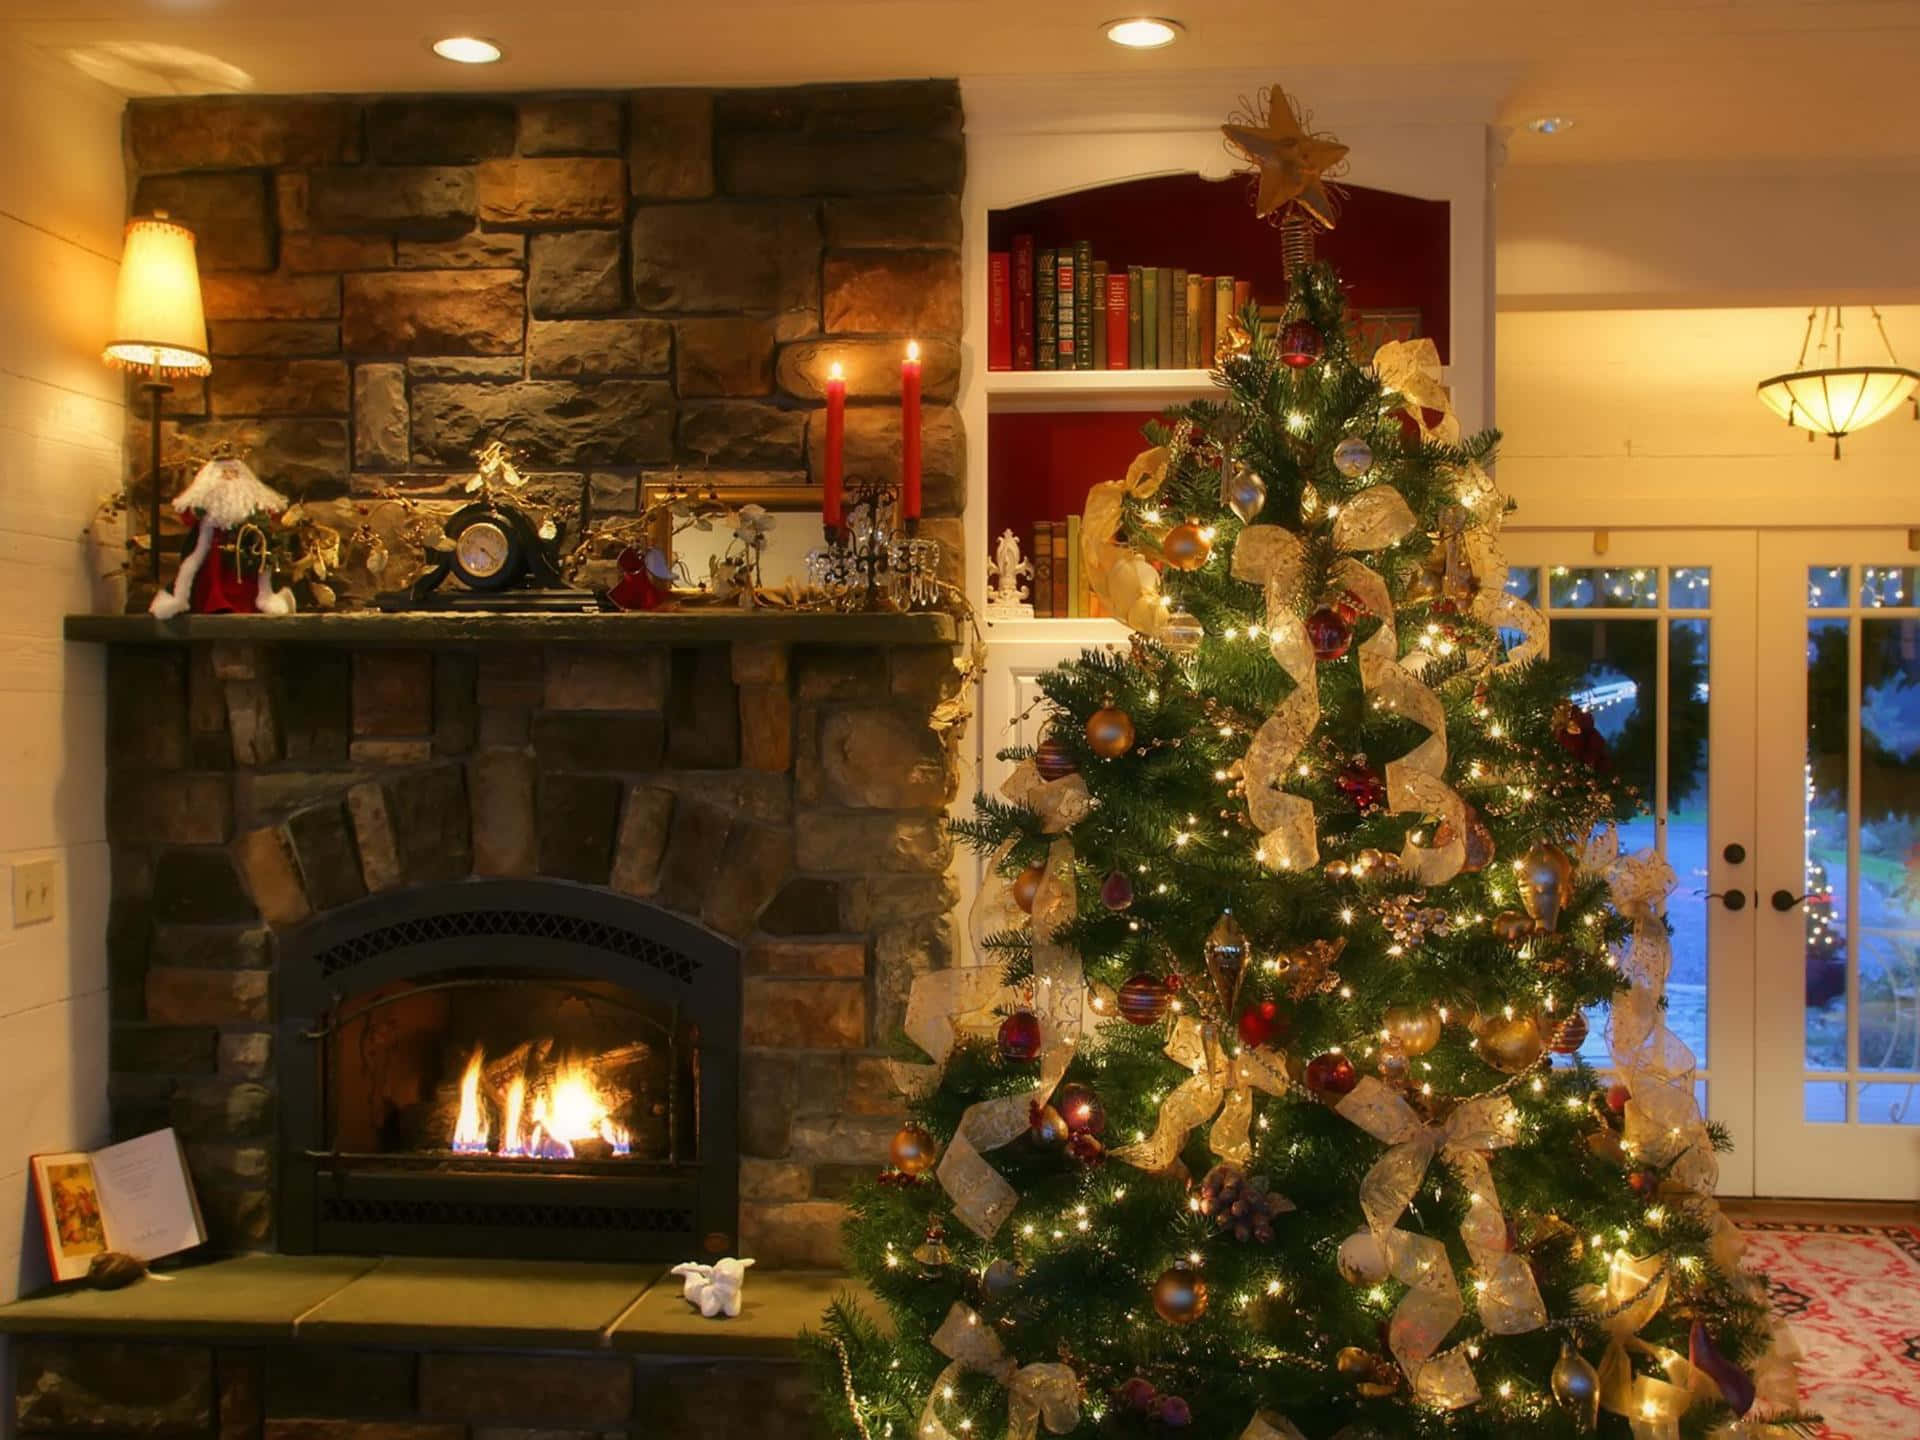 Christmas Fireplace Beside Bookshelf Background